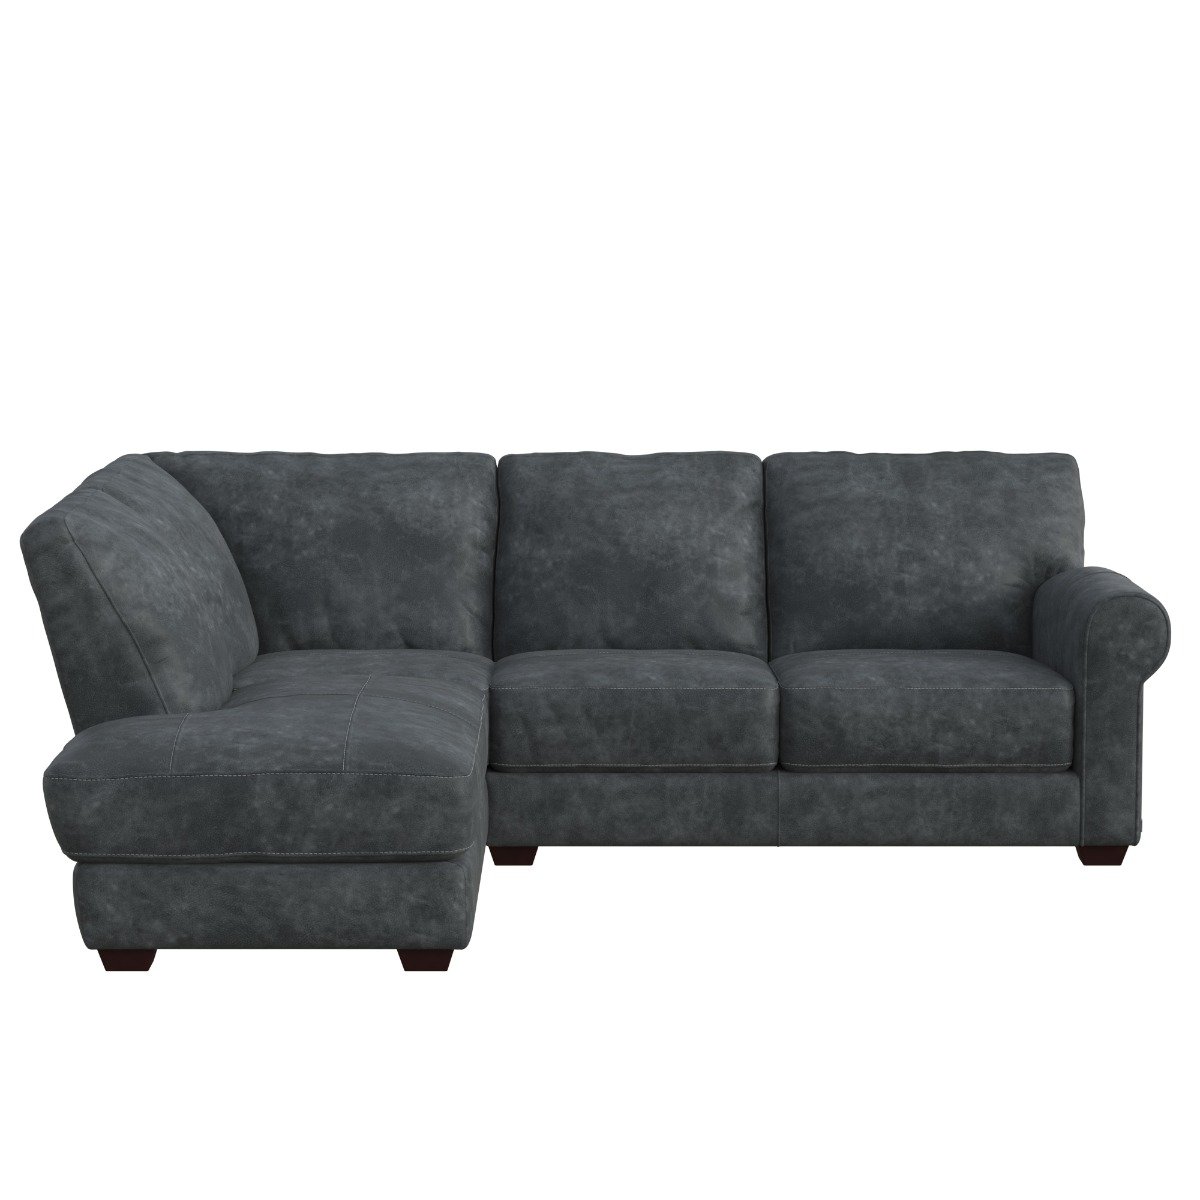 Houston Medium Corner Sofa Chaise Left, Grey Leather | Barker & Stonehouse